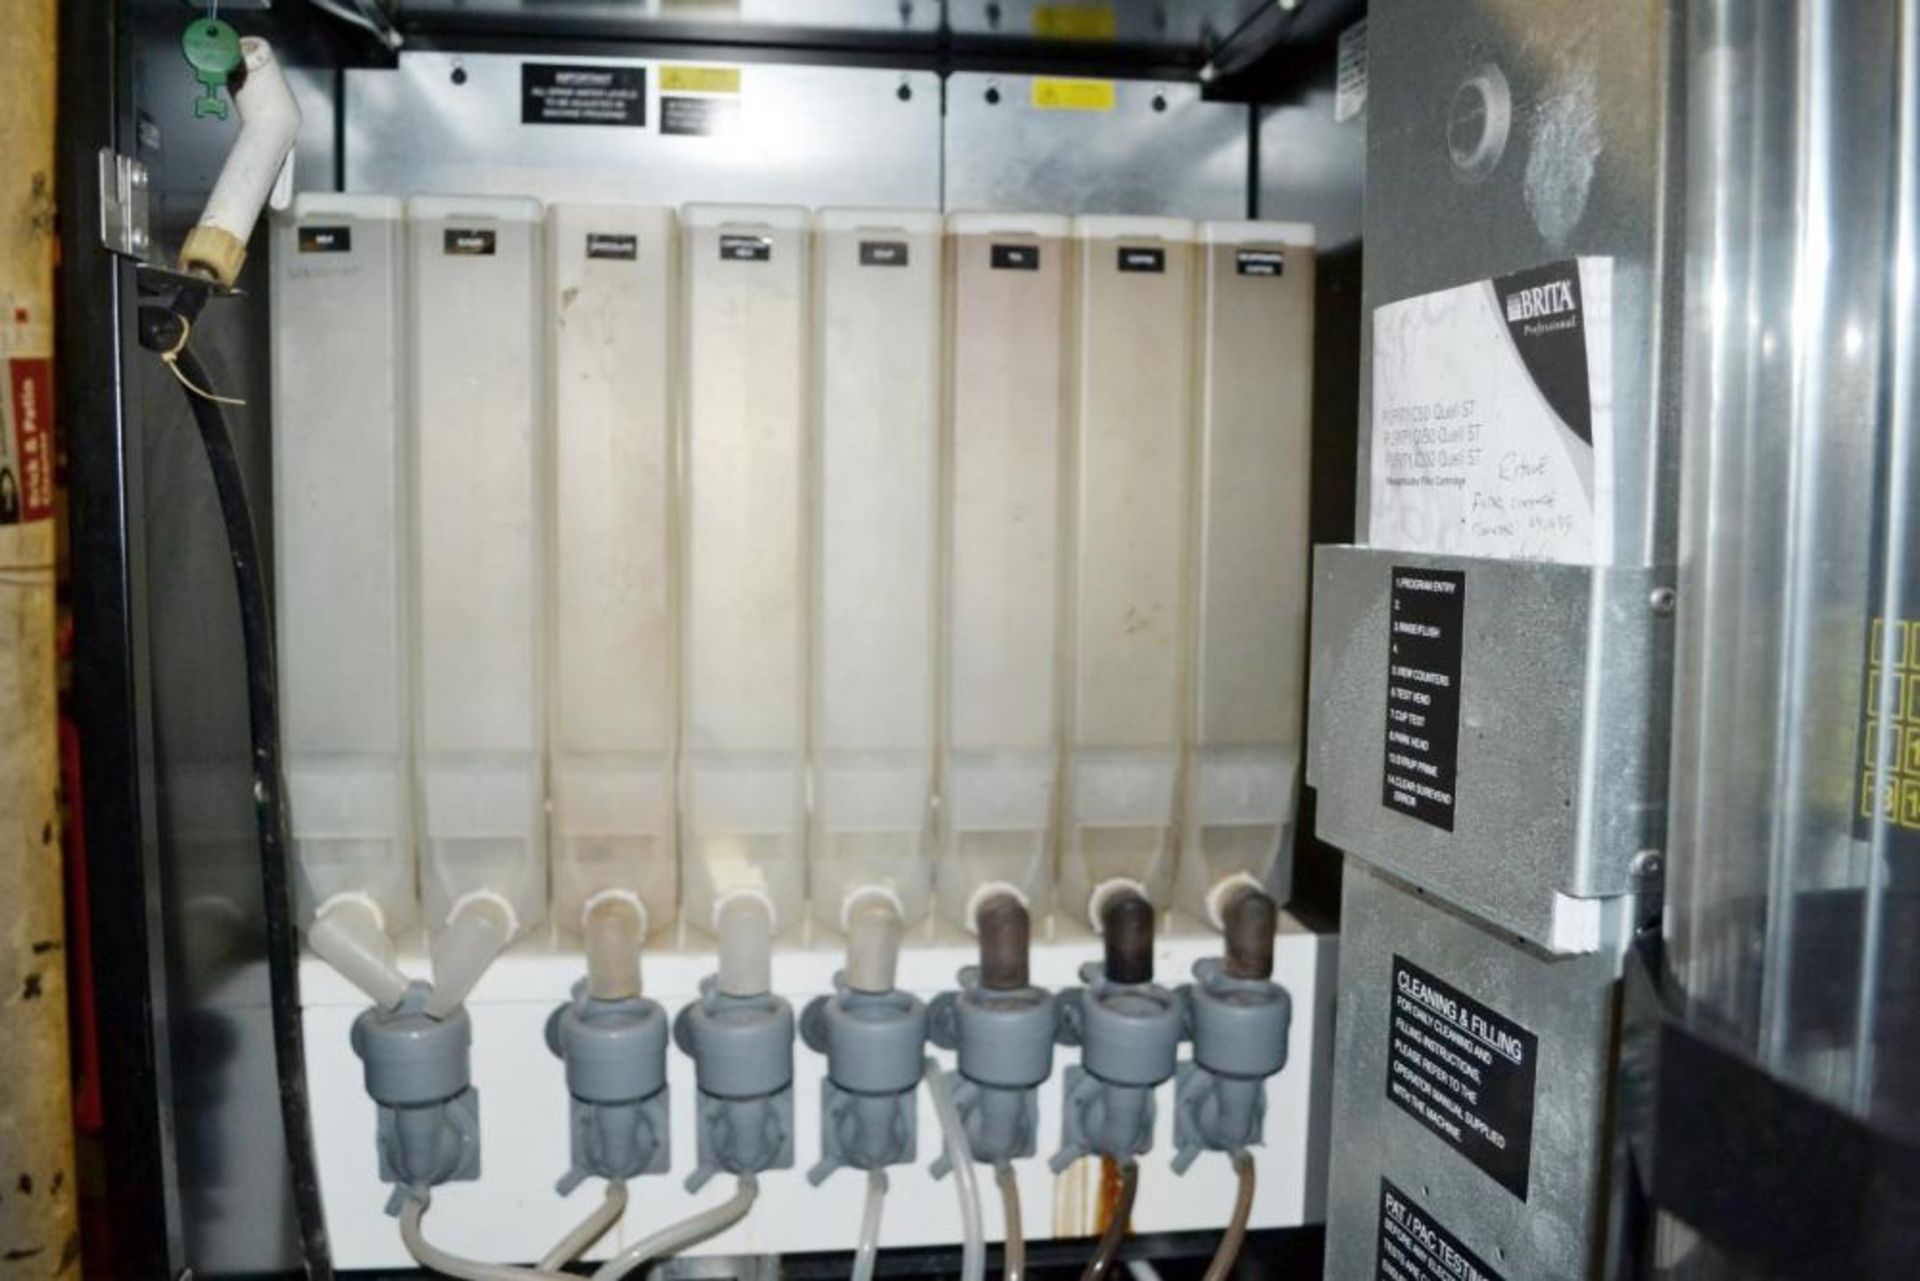 1 x Crane "Evolution" Hot Beverage Drinks Vending Machine With Keys - Year: 2009 - Recently Taken - Image 8 of 14